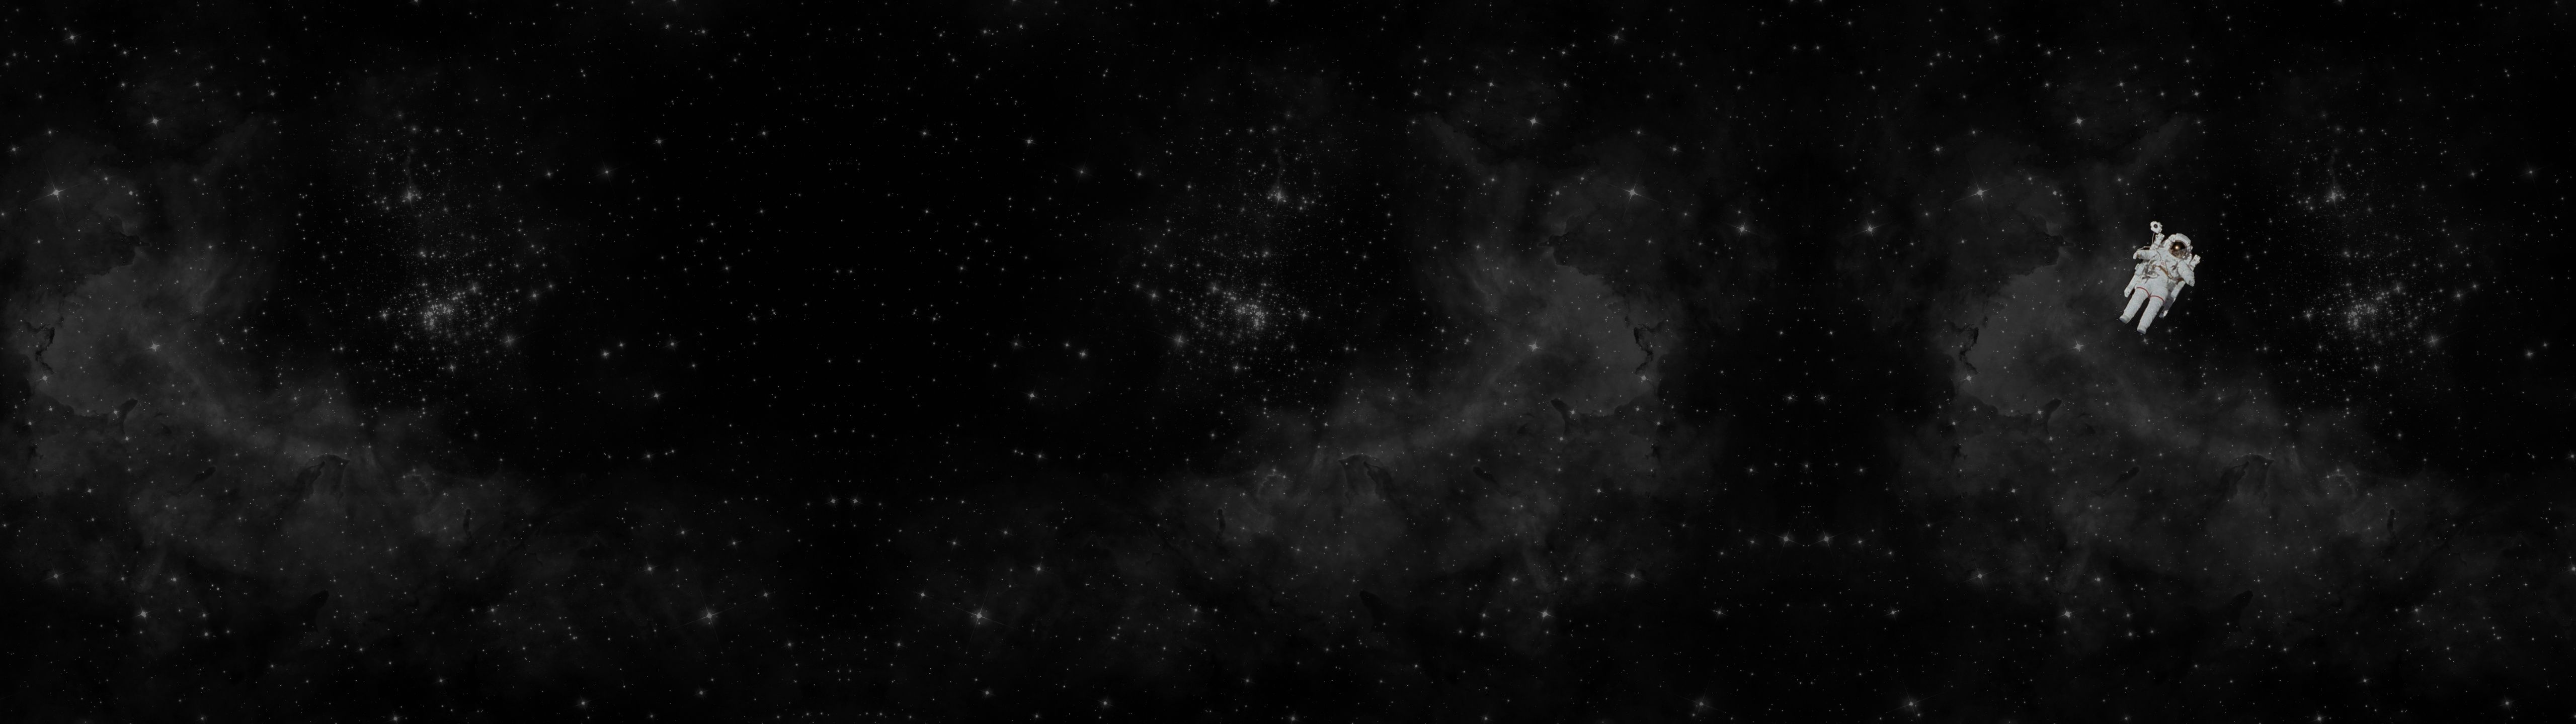 Space Man [5120x1440]. Desktop background image, Wallpaper space, Space theme